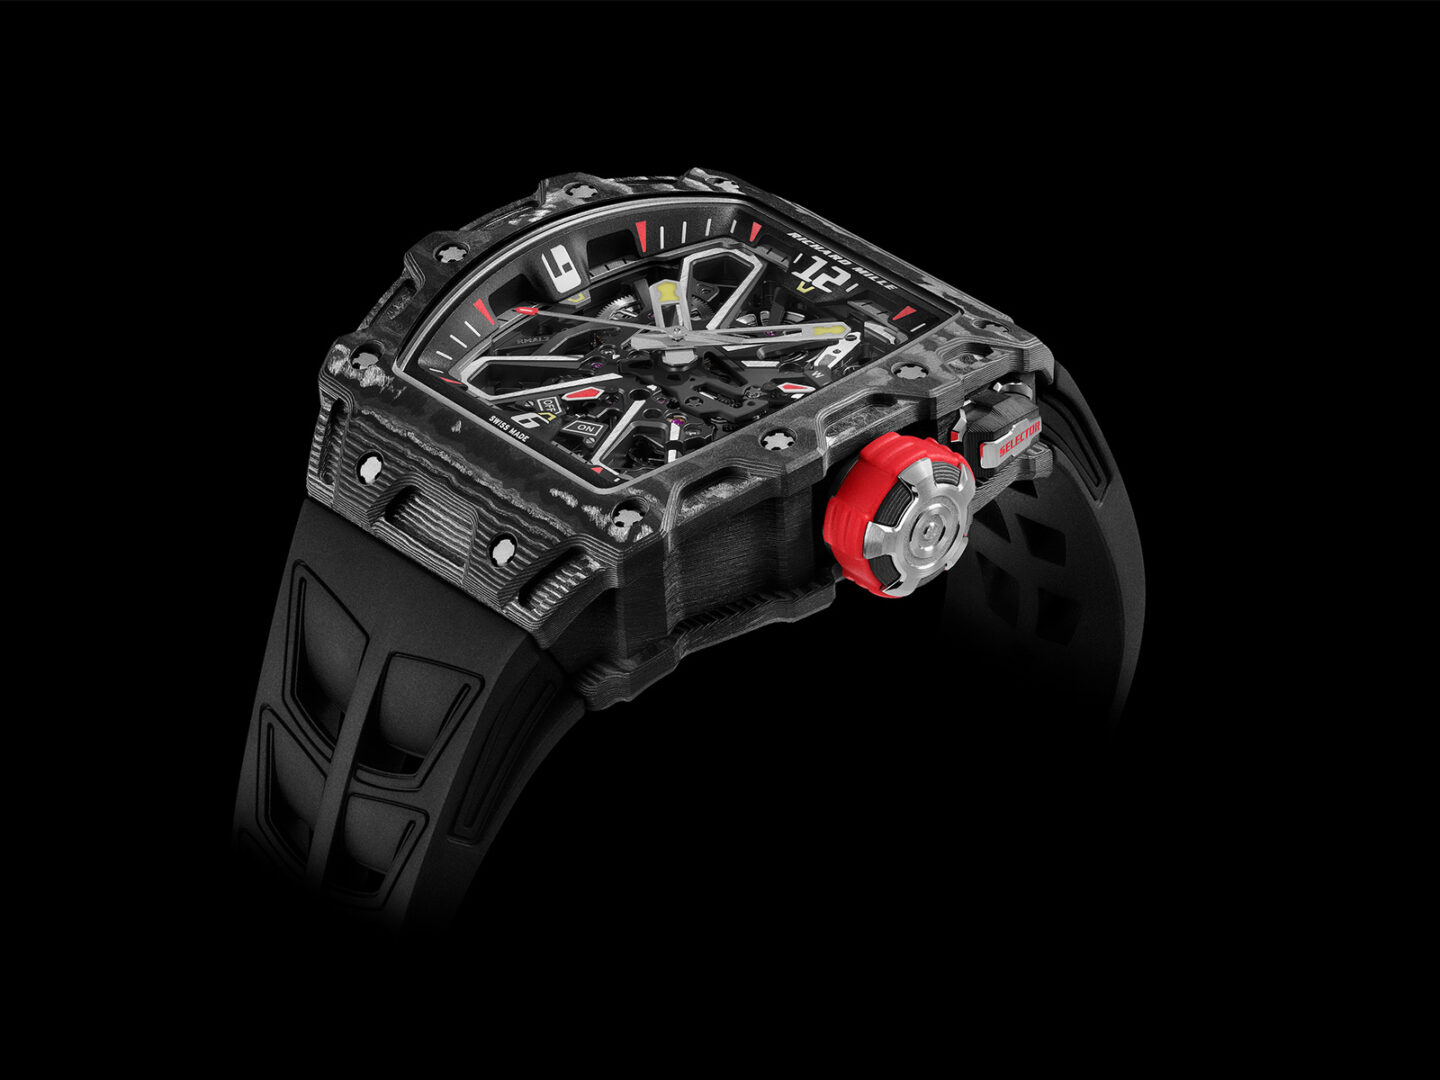 Rafael Nadal's butterfly effect, the latest Richard Mille watch to wear  black - HIGHXTAR.